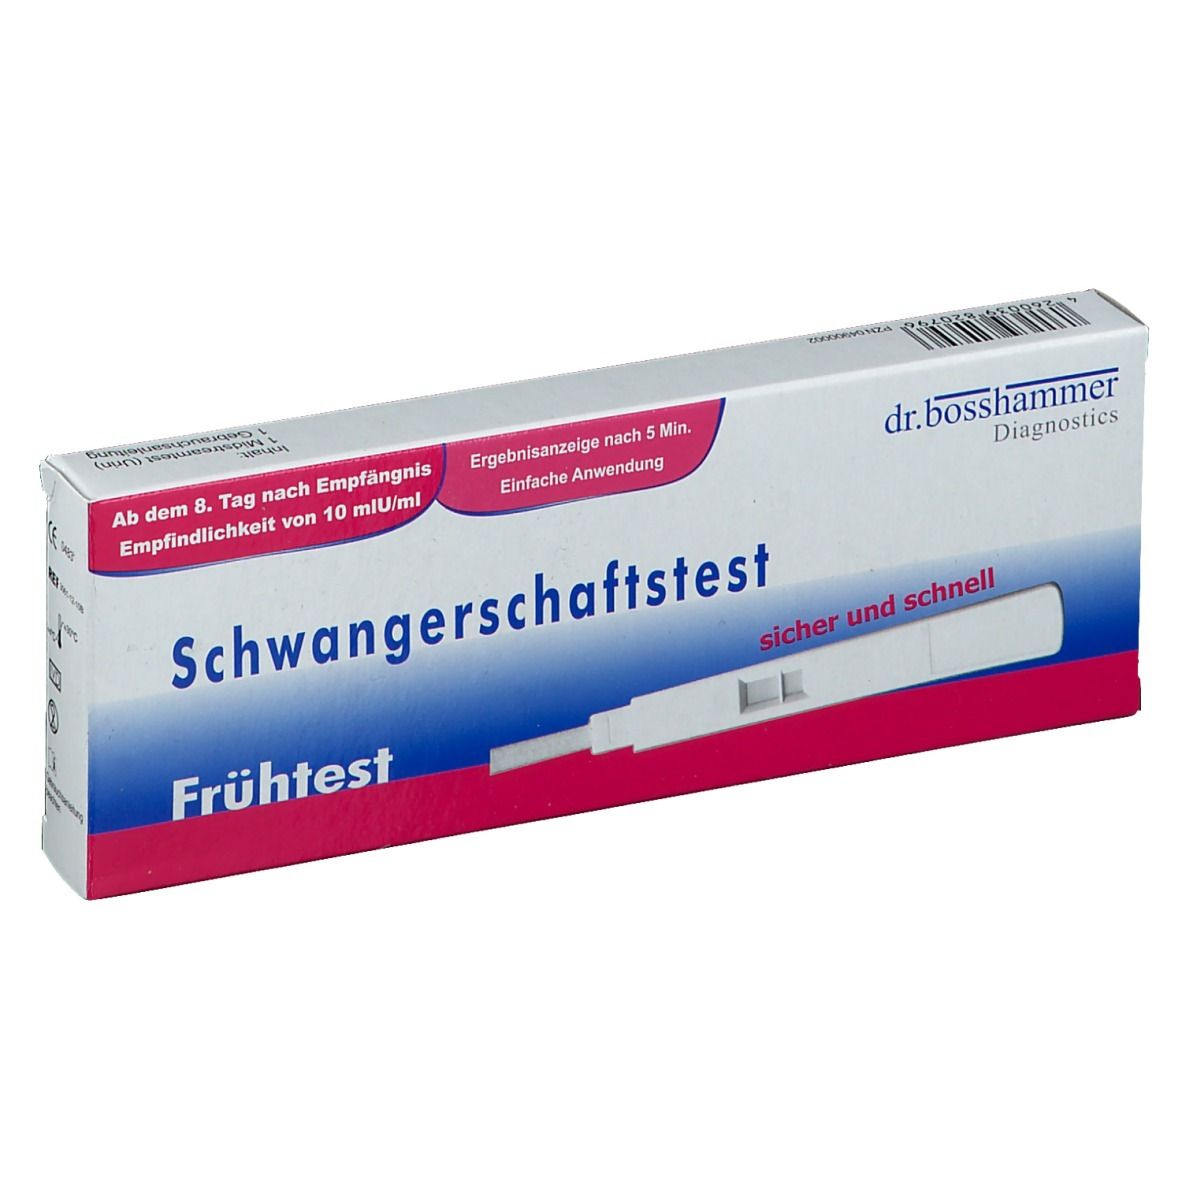 apotheke schwangerschaftstest - gsdetectors.com.